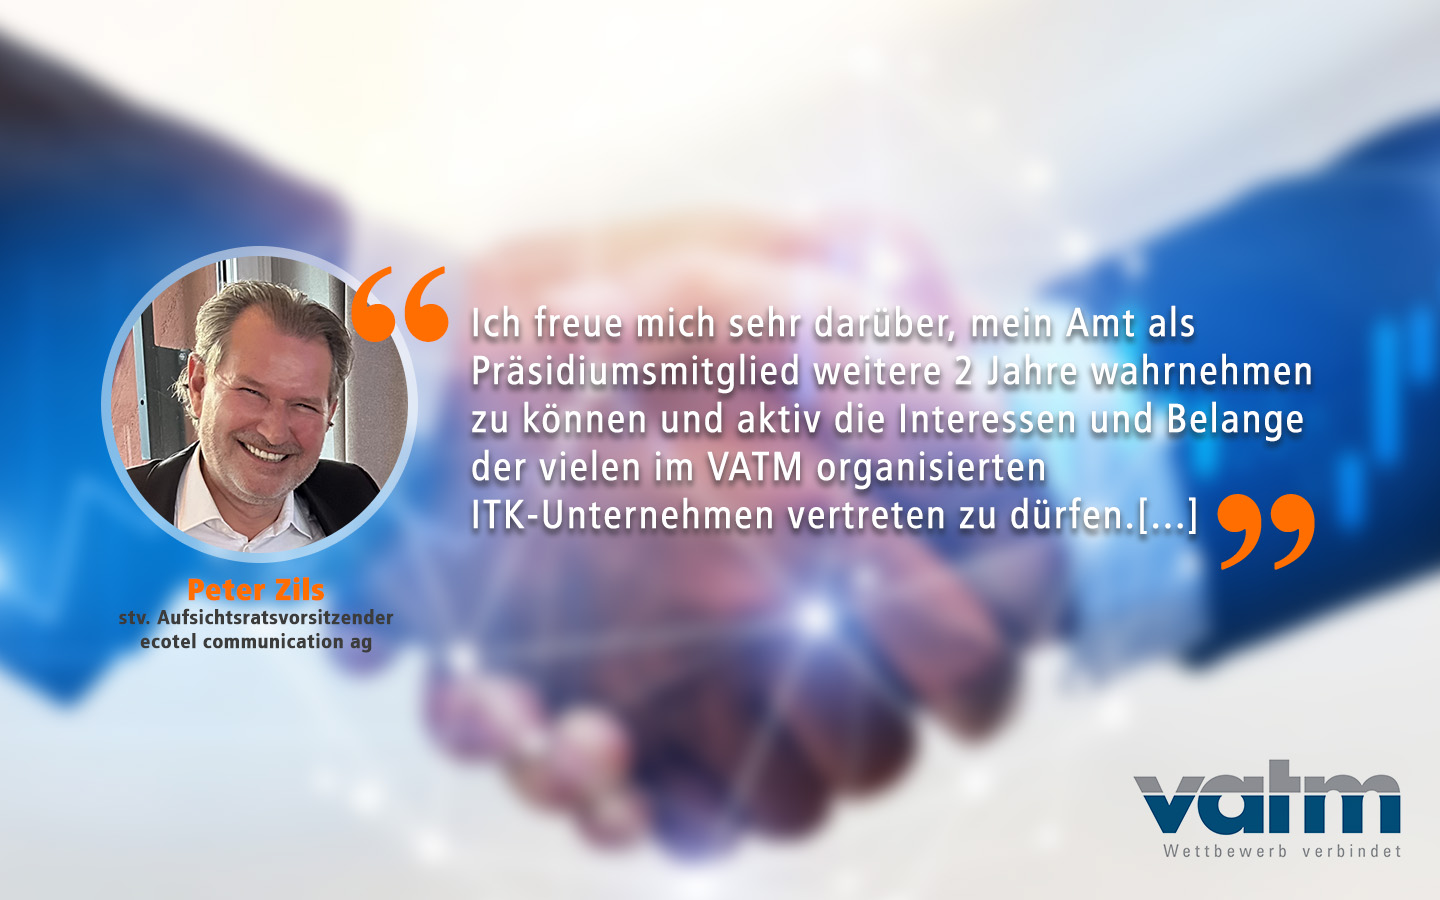 Peter Zils als Präsidumsmitglied des VATM bestätigt